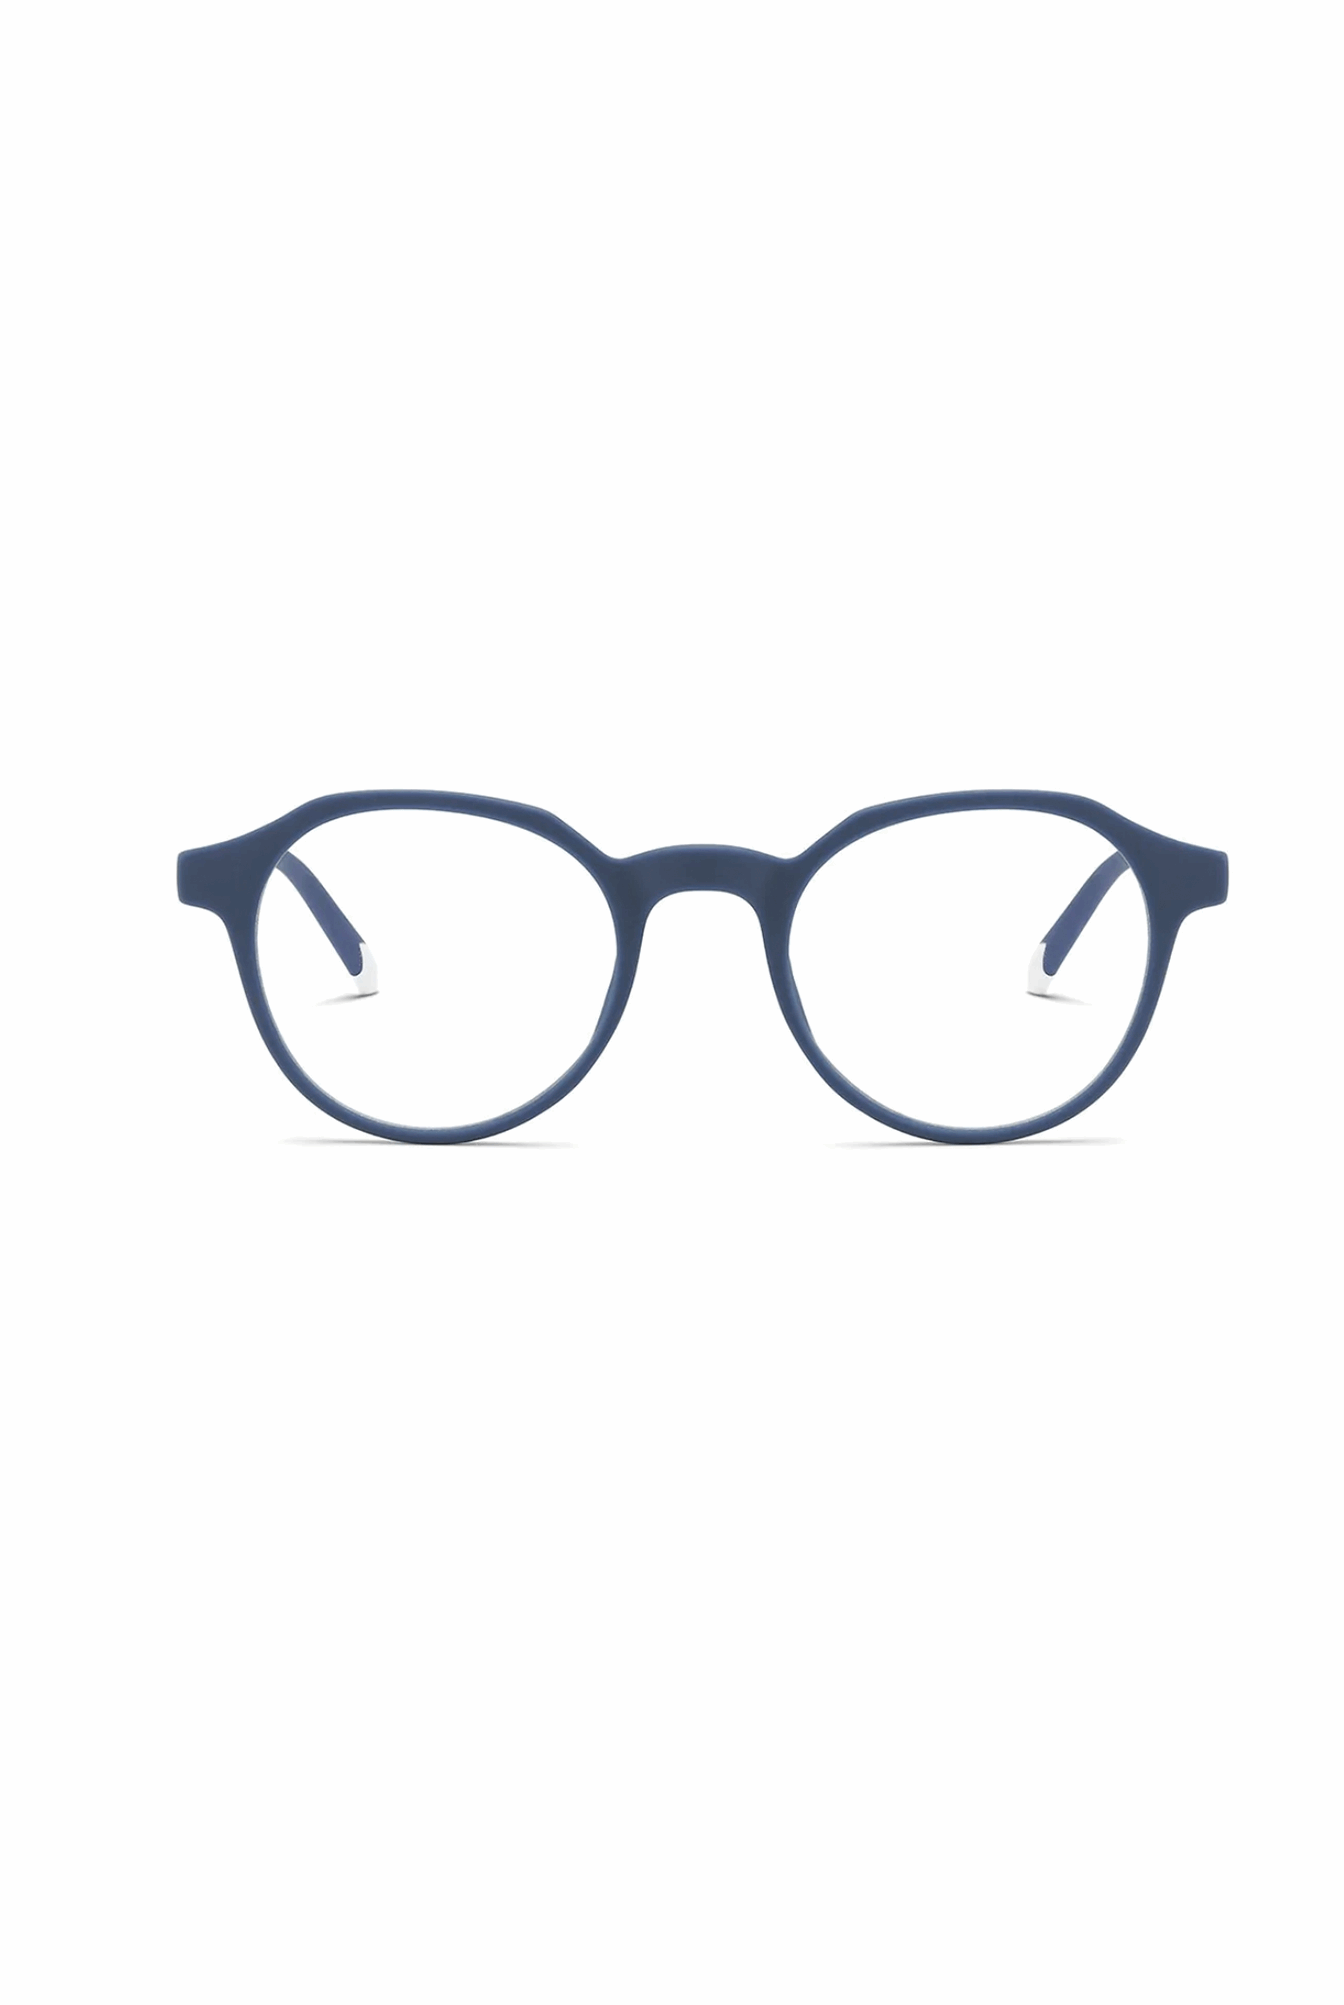 Barner - CHAMBERI - Neutral Glasses